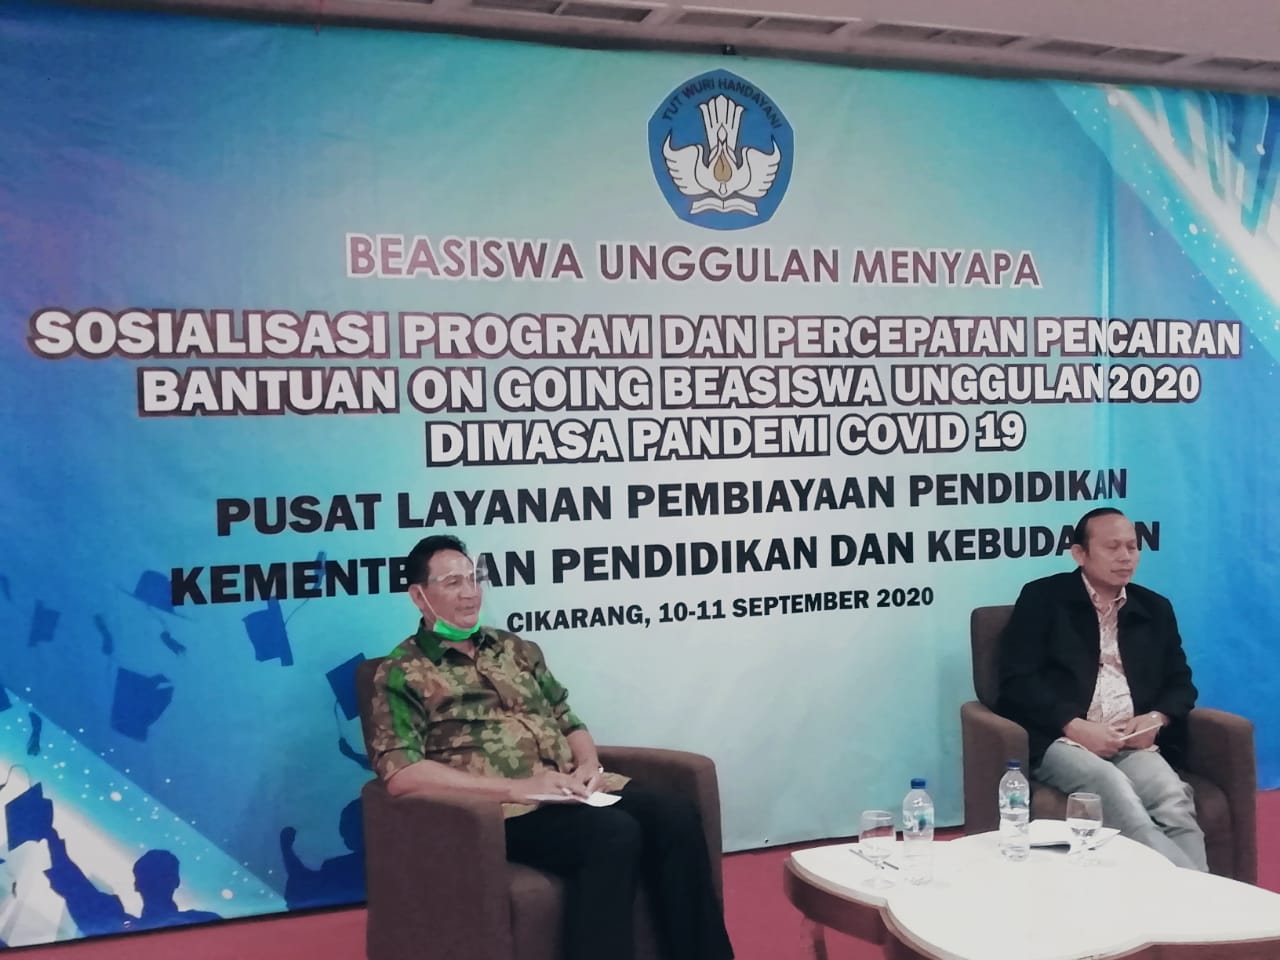 BEASISWA. Sosialisasi Program Percepatan Pencairan Bantuan On Going Beasiswa Unggulan 2020 di Masa Pandemi Covid-19, di Cikarang, Jawa Barat. (foto: int)